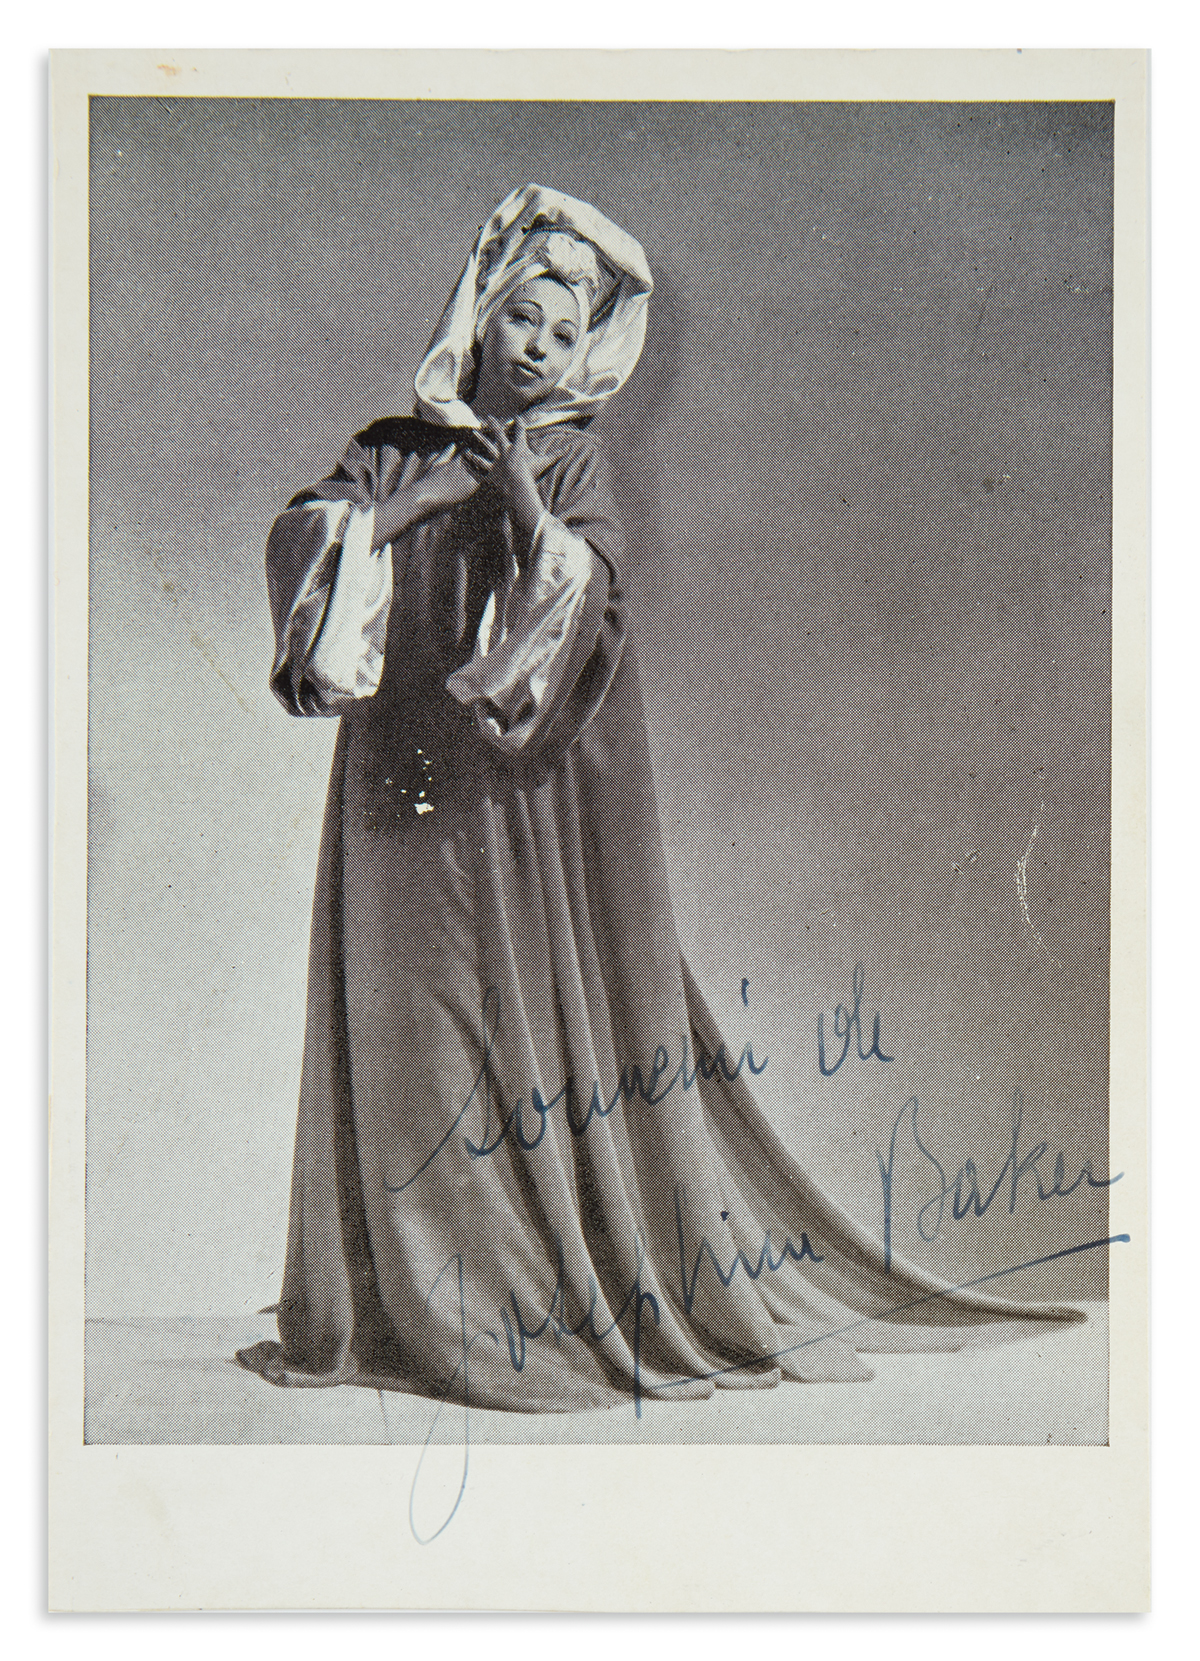 BAKER, JOSEPHINE. Photograph Signed and Inscribed, Souvenir de / Josephine Baker,